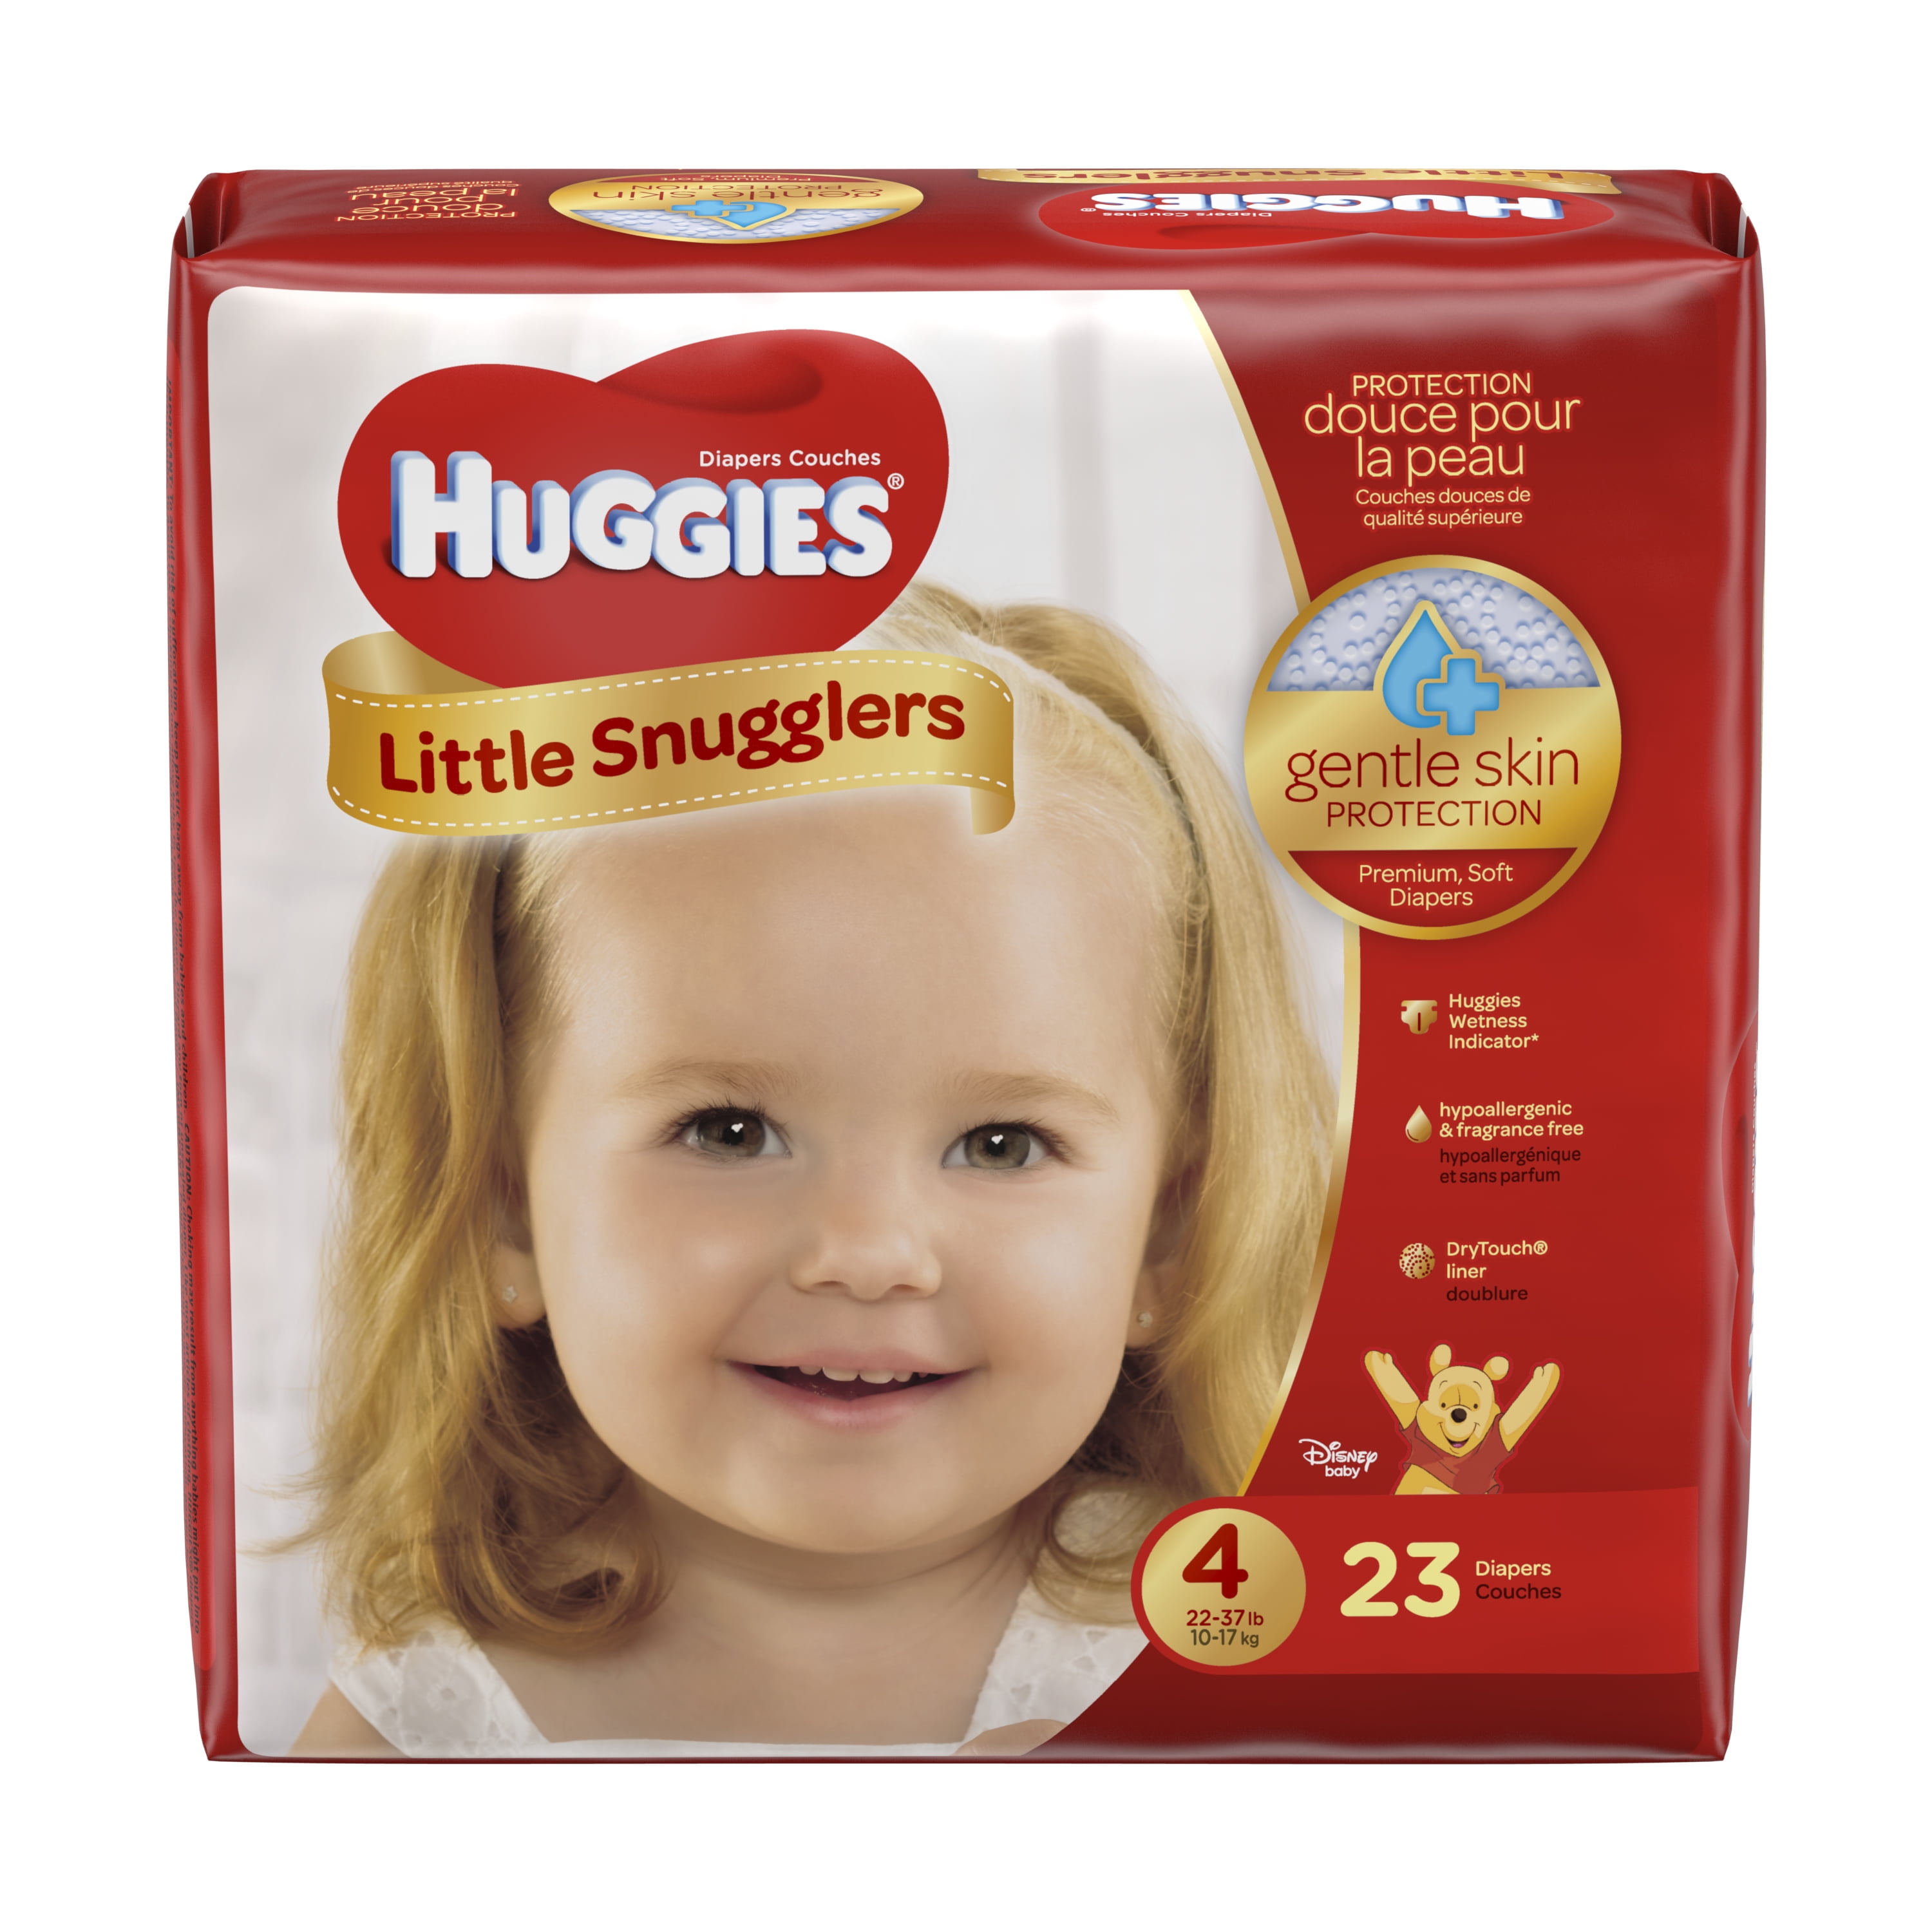 huggies jumbo pack size 6